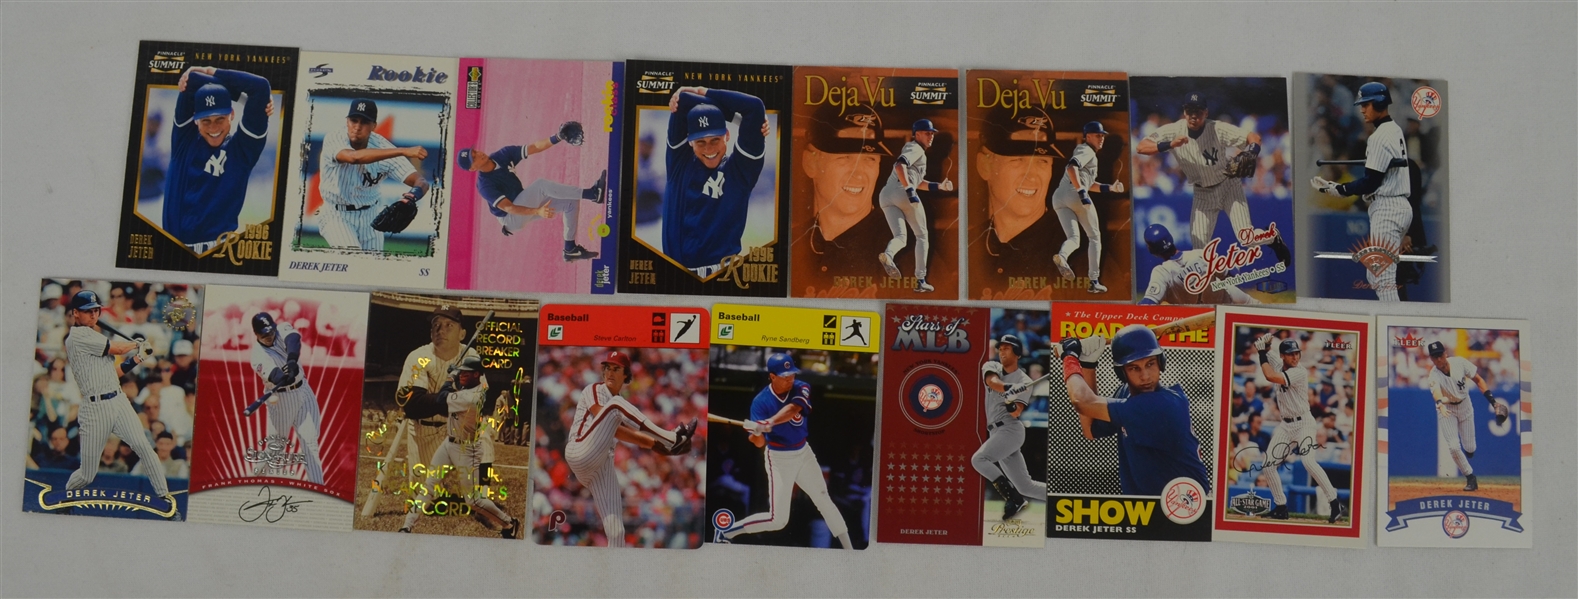 MLB Collection of 17 Baseball Cards w/Derek Jeter